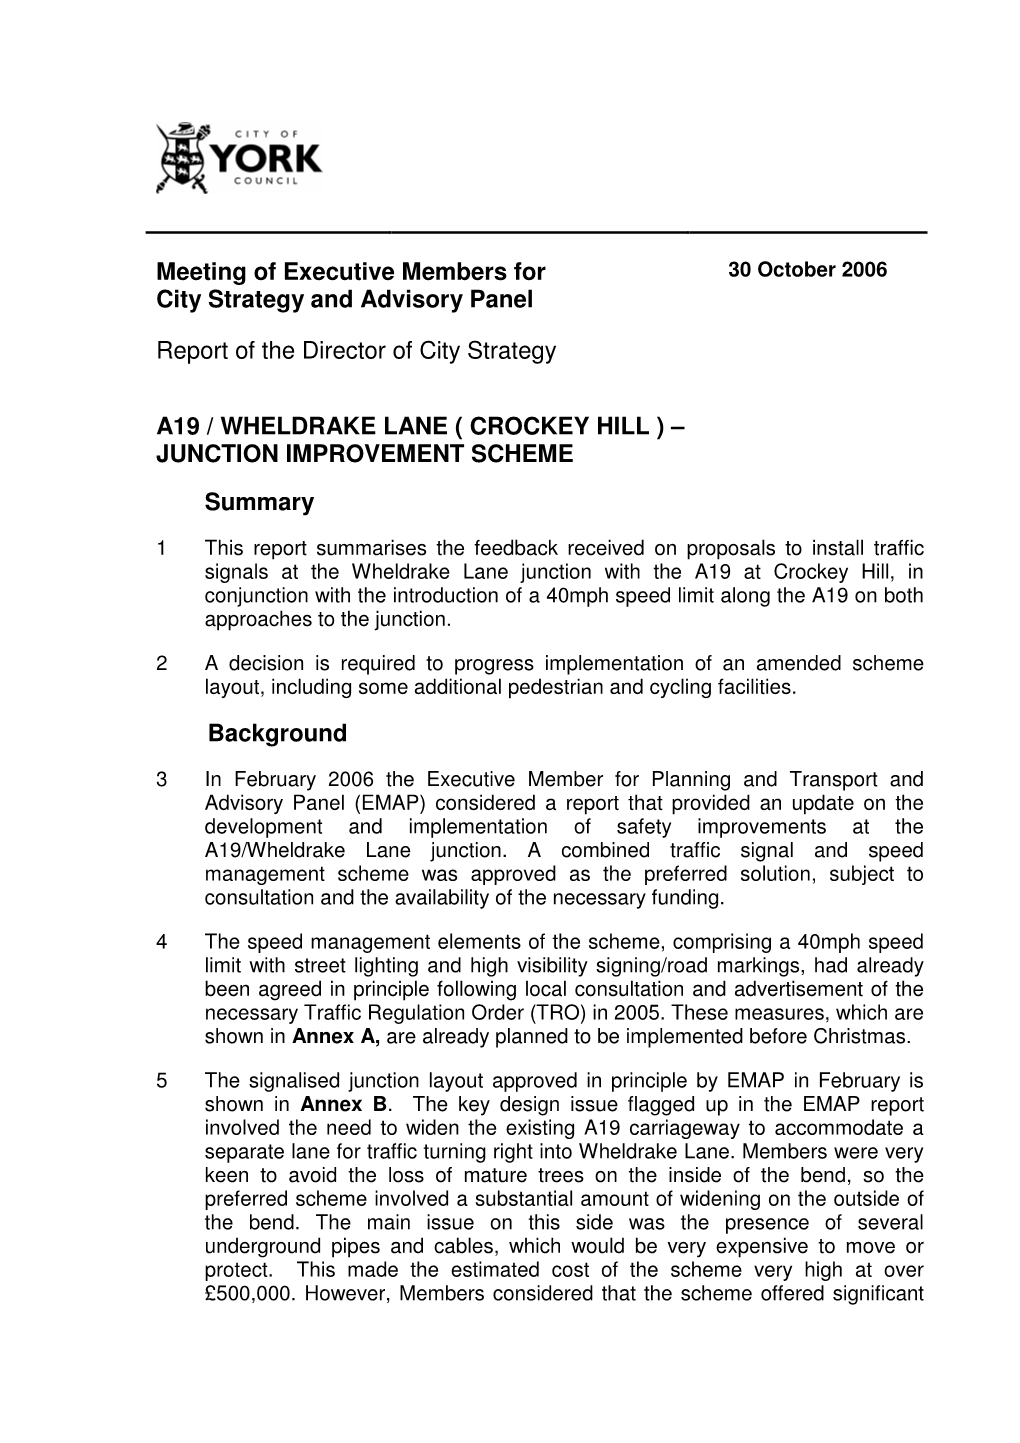 A19 / Wheldrake Lane ( Crockey Hill) – Junction Improvement Scheme PDF 74 KB